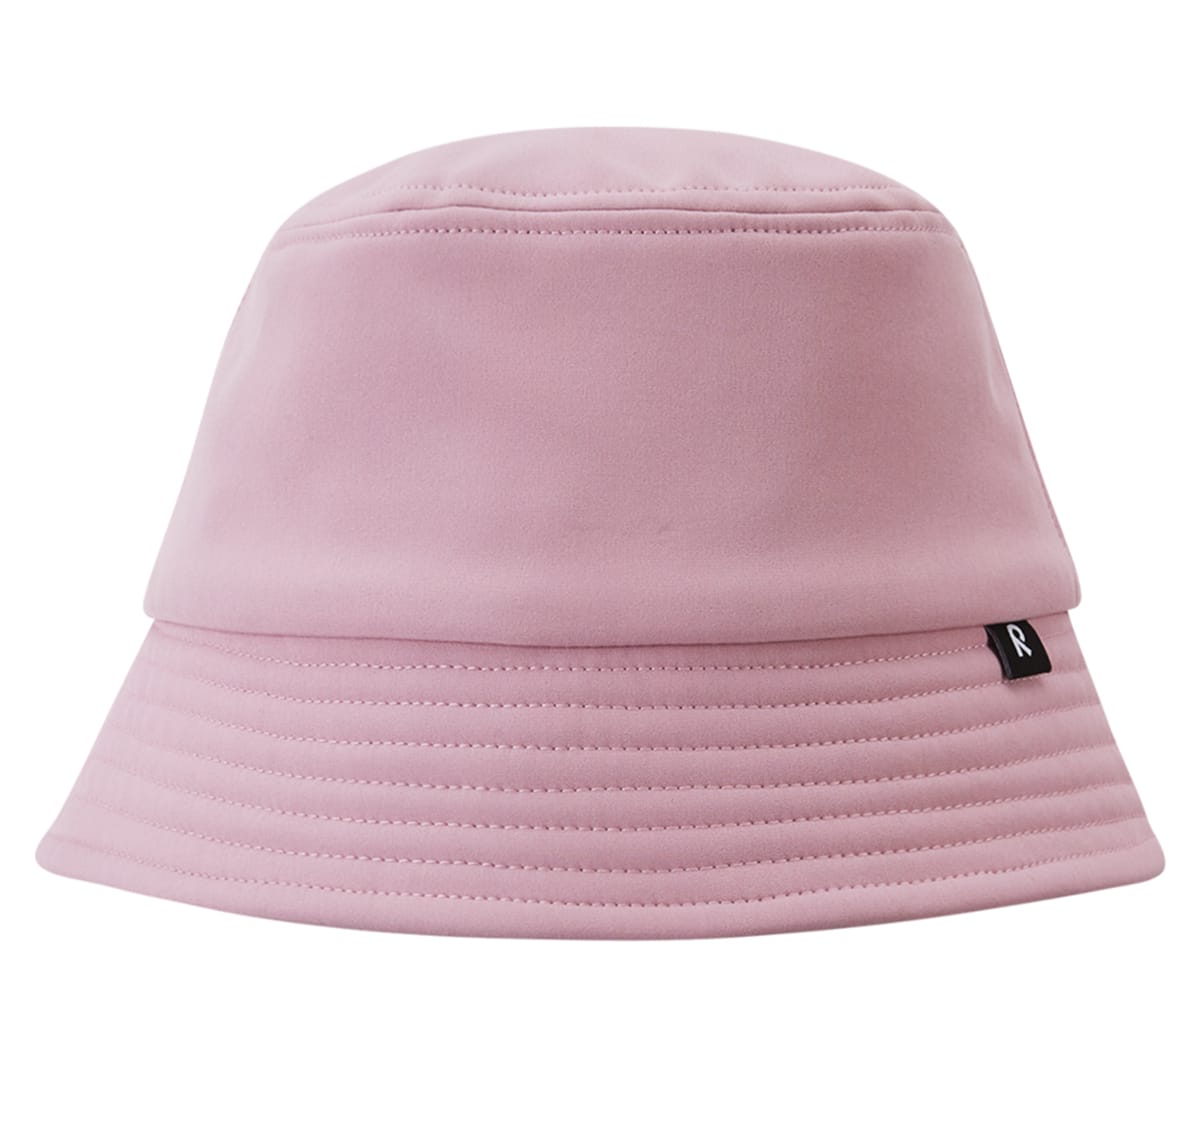 Reima Hat, Puketti Grey Pink